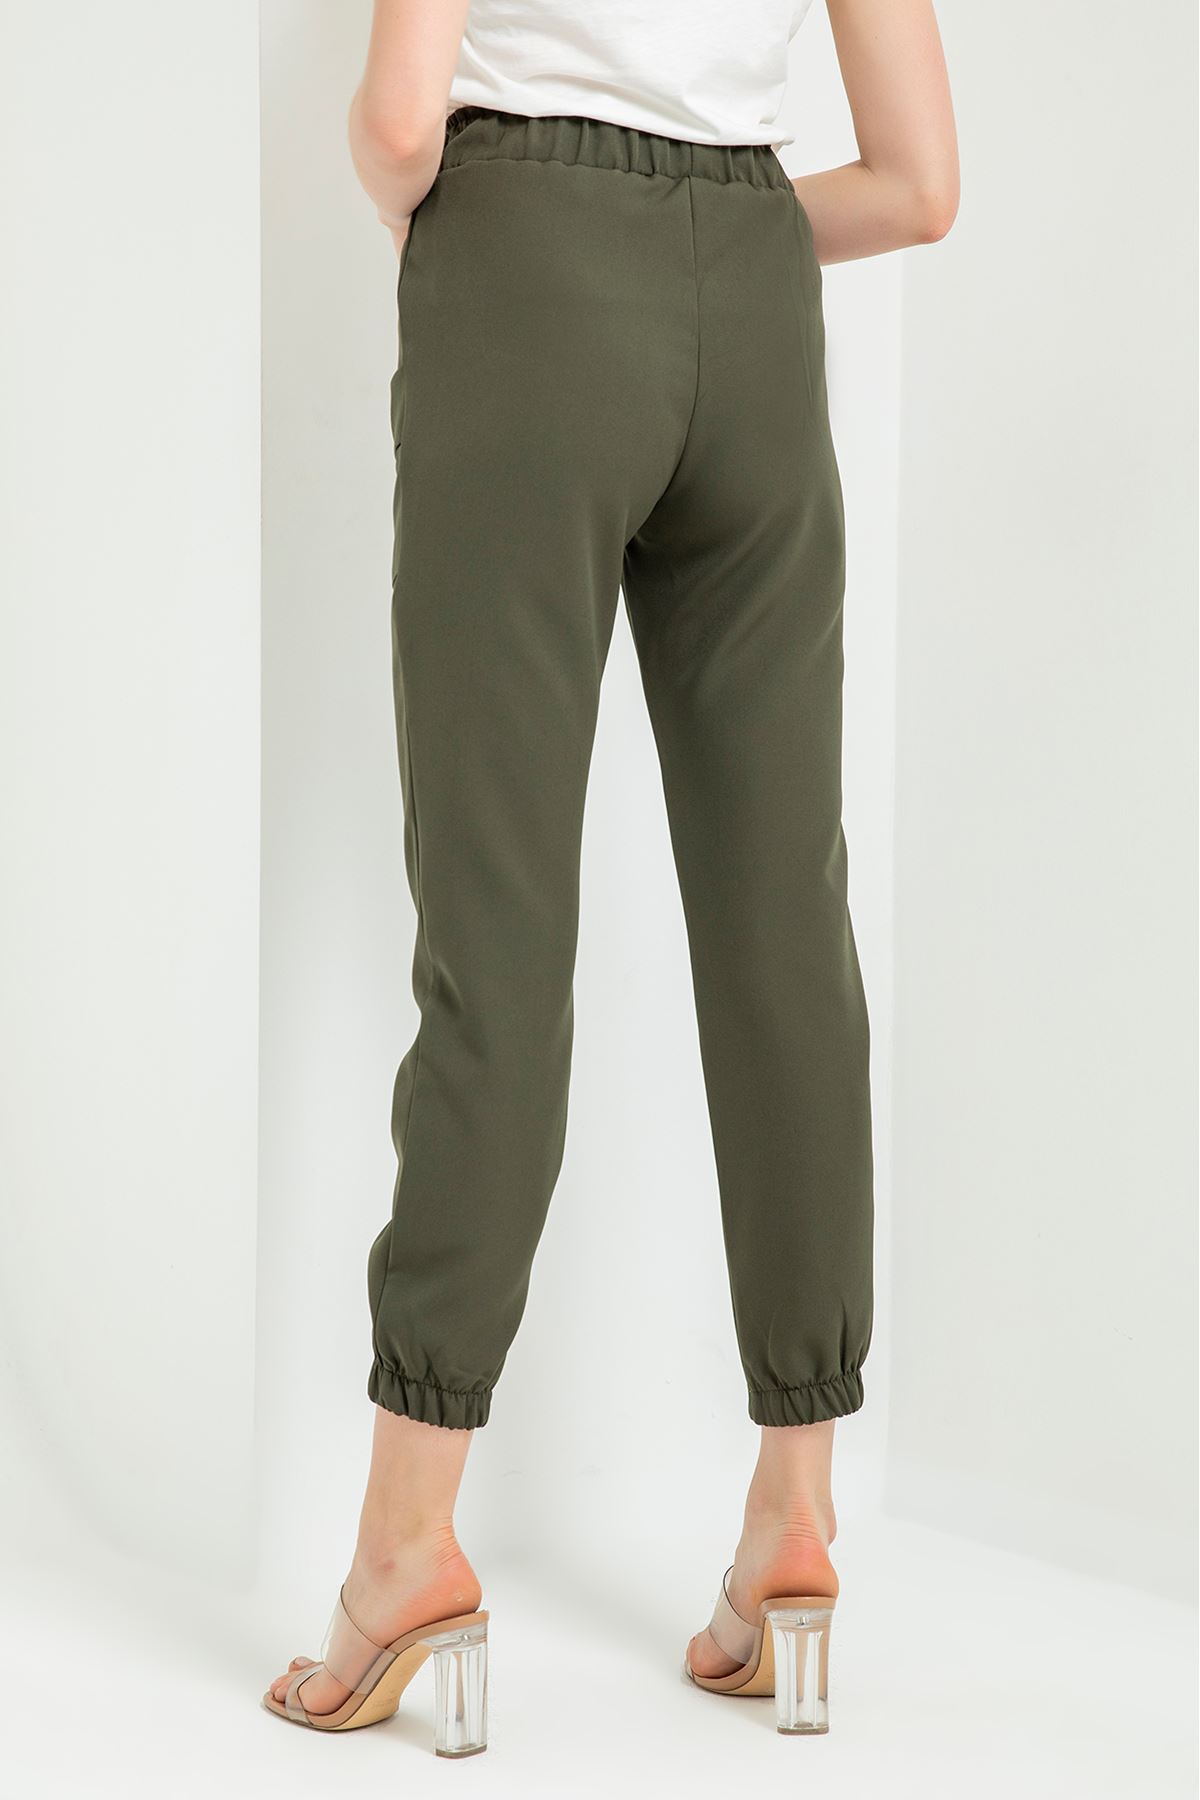 Licra Fabric Ankle Length Elastic Waist Jogger Women'S Trouser - Khaki 